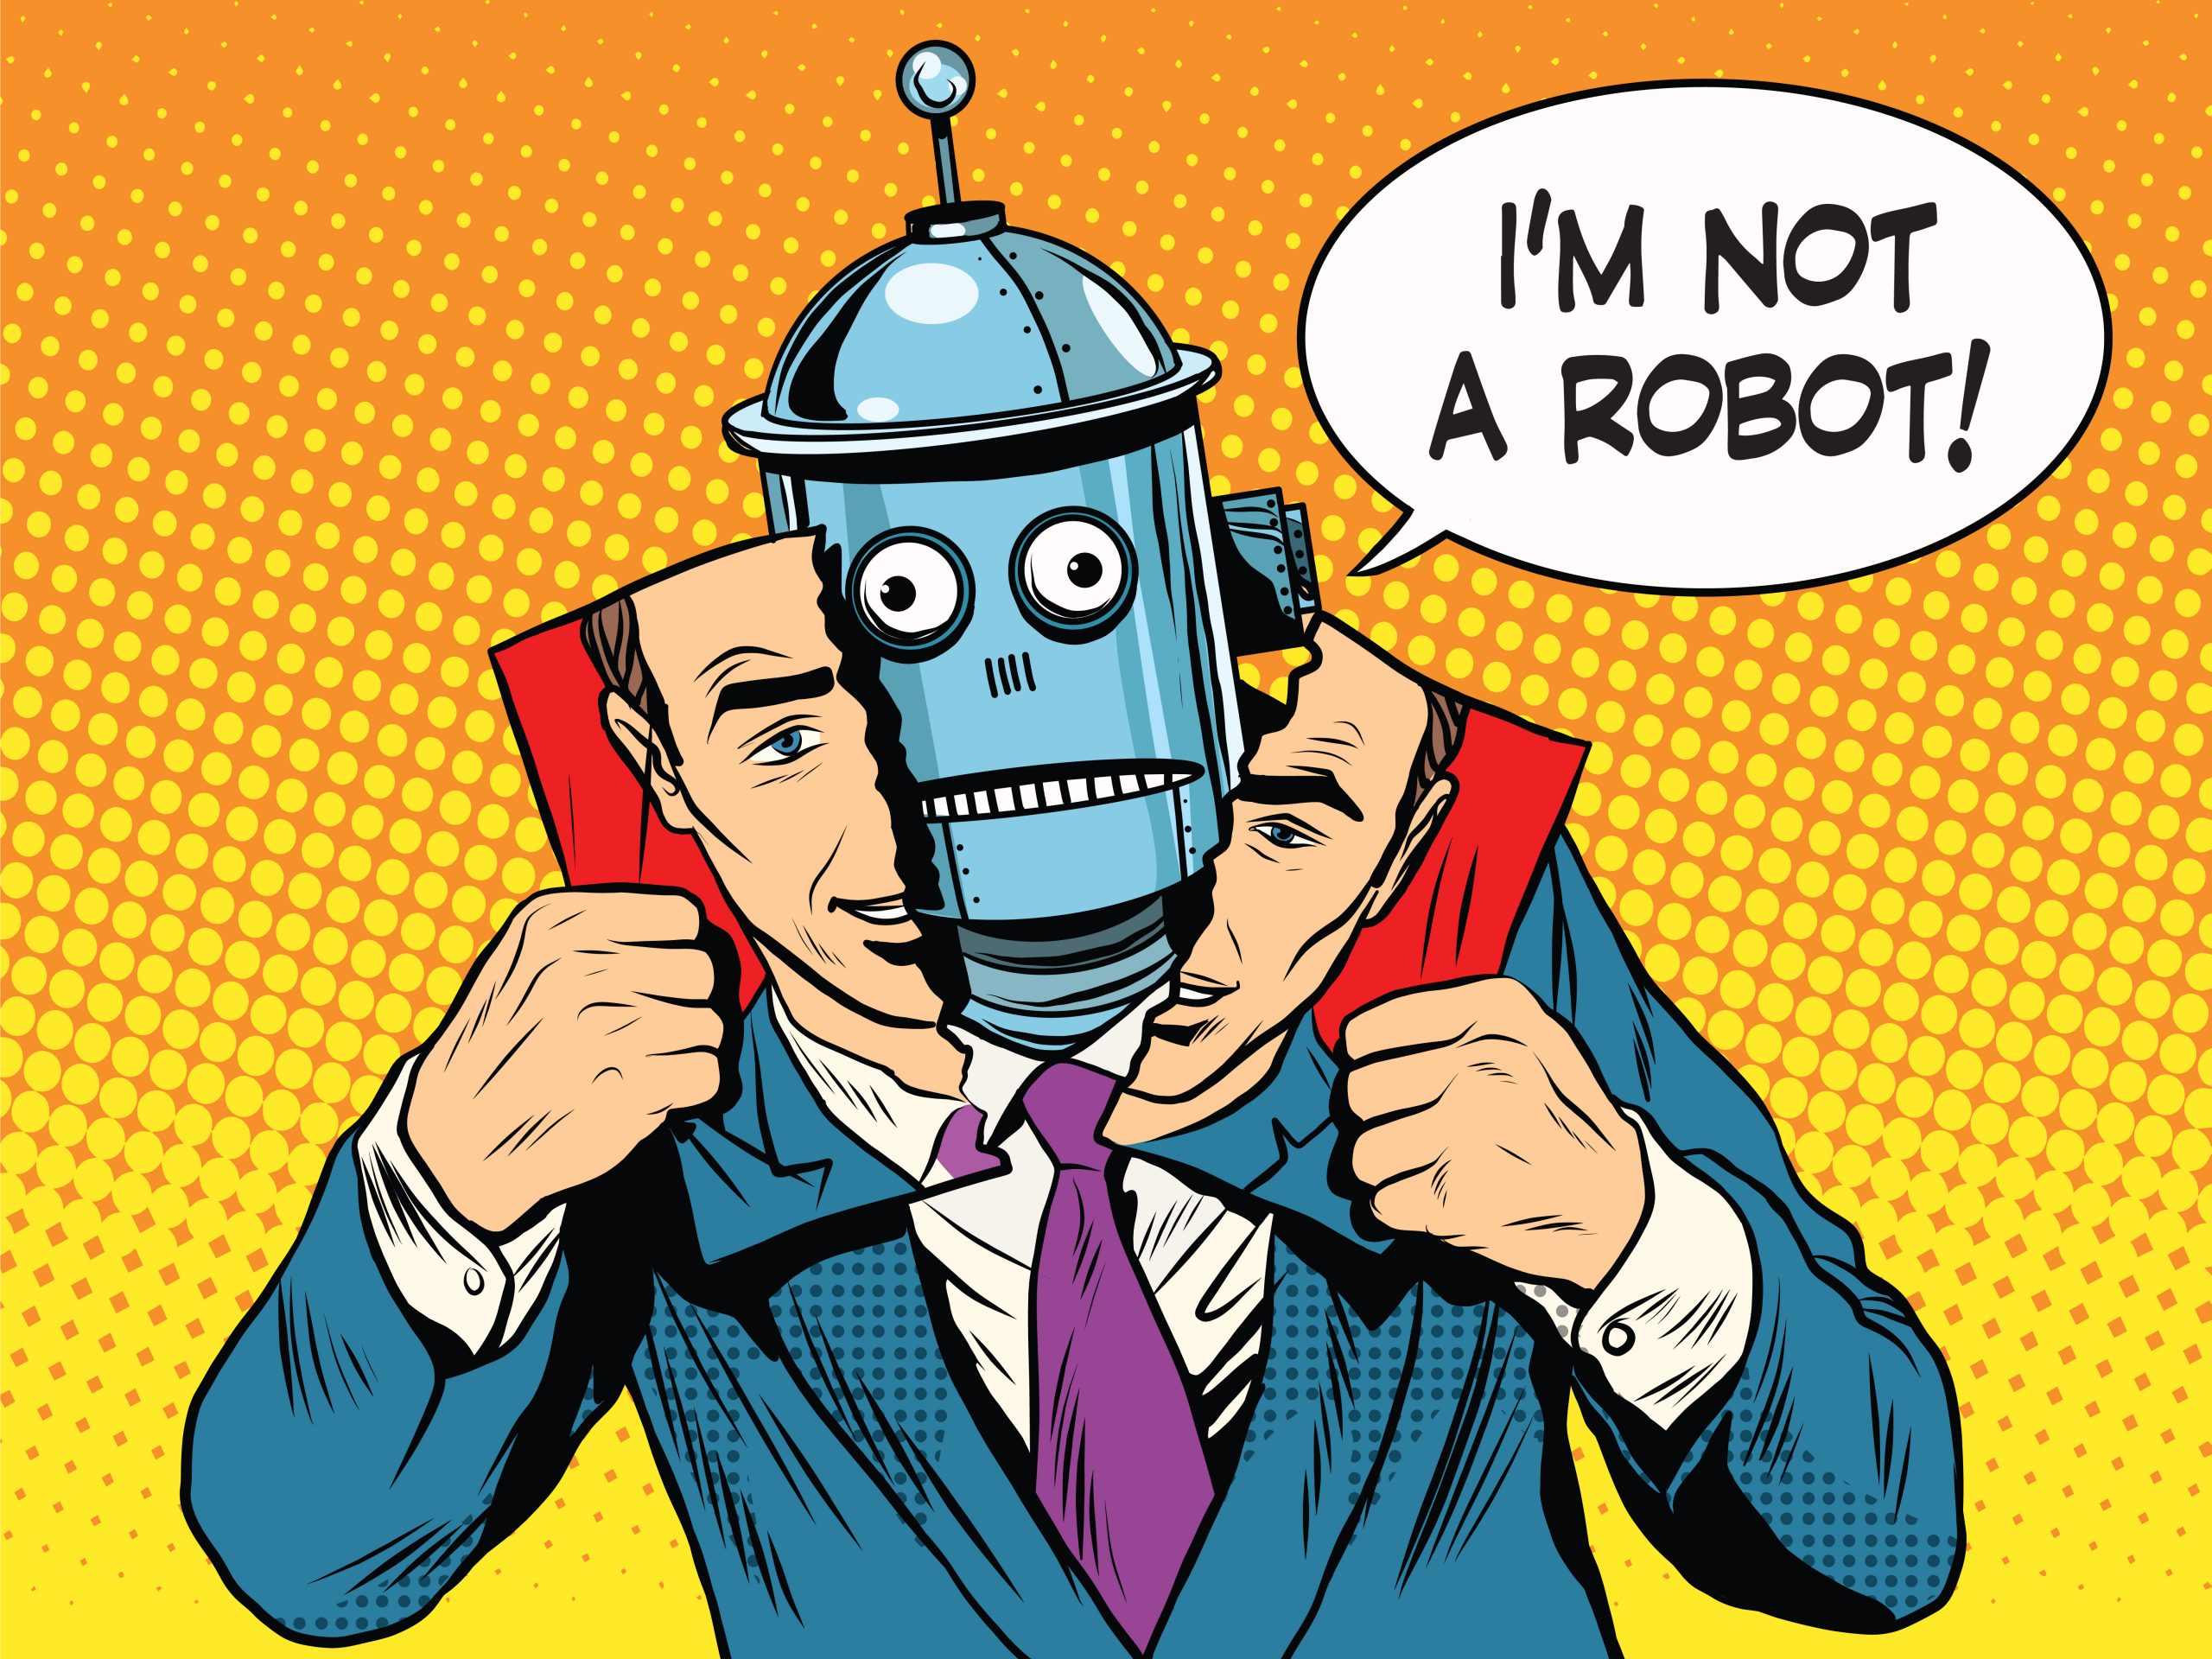 https://depositphotos.com/102205474/stock-illustration-artificial-intelligence-robot-pretending-to.html